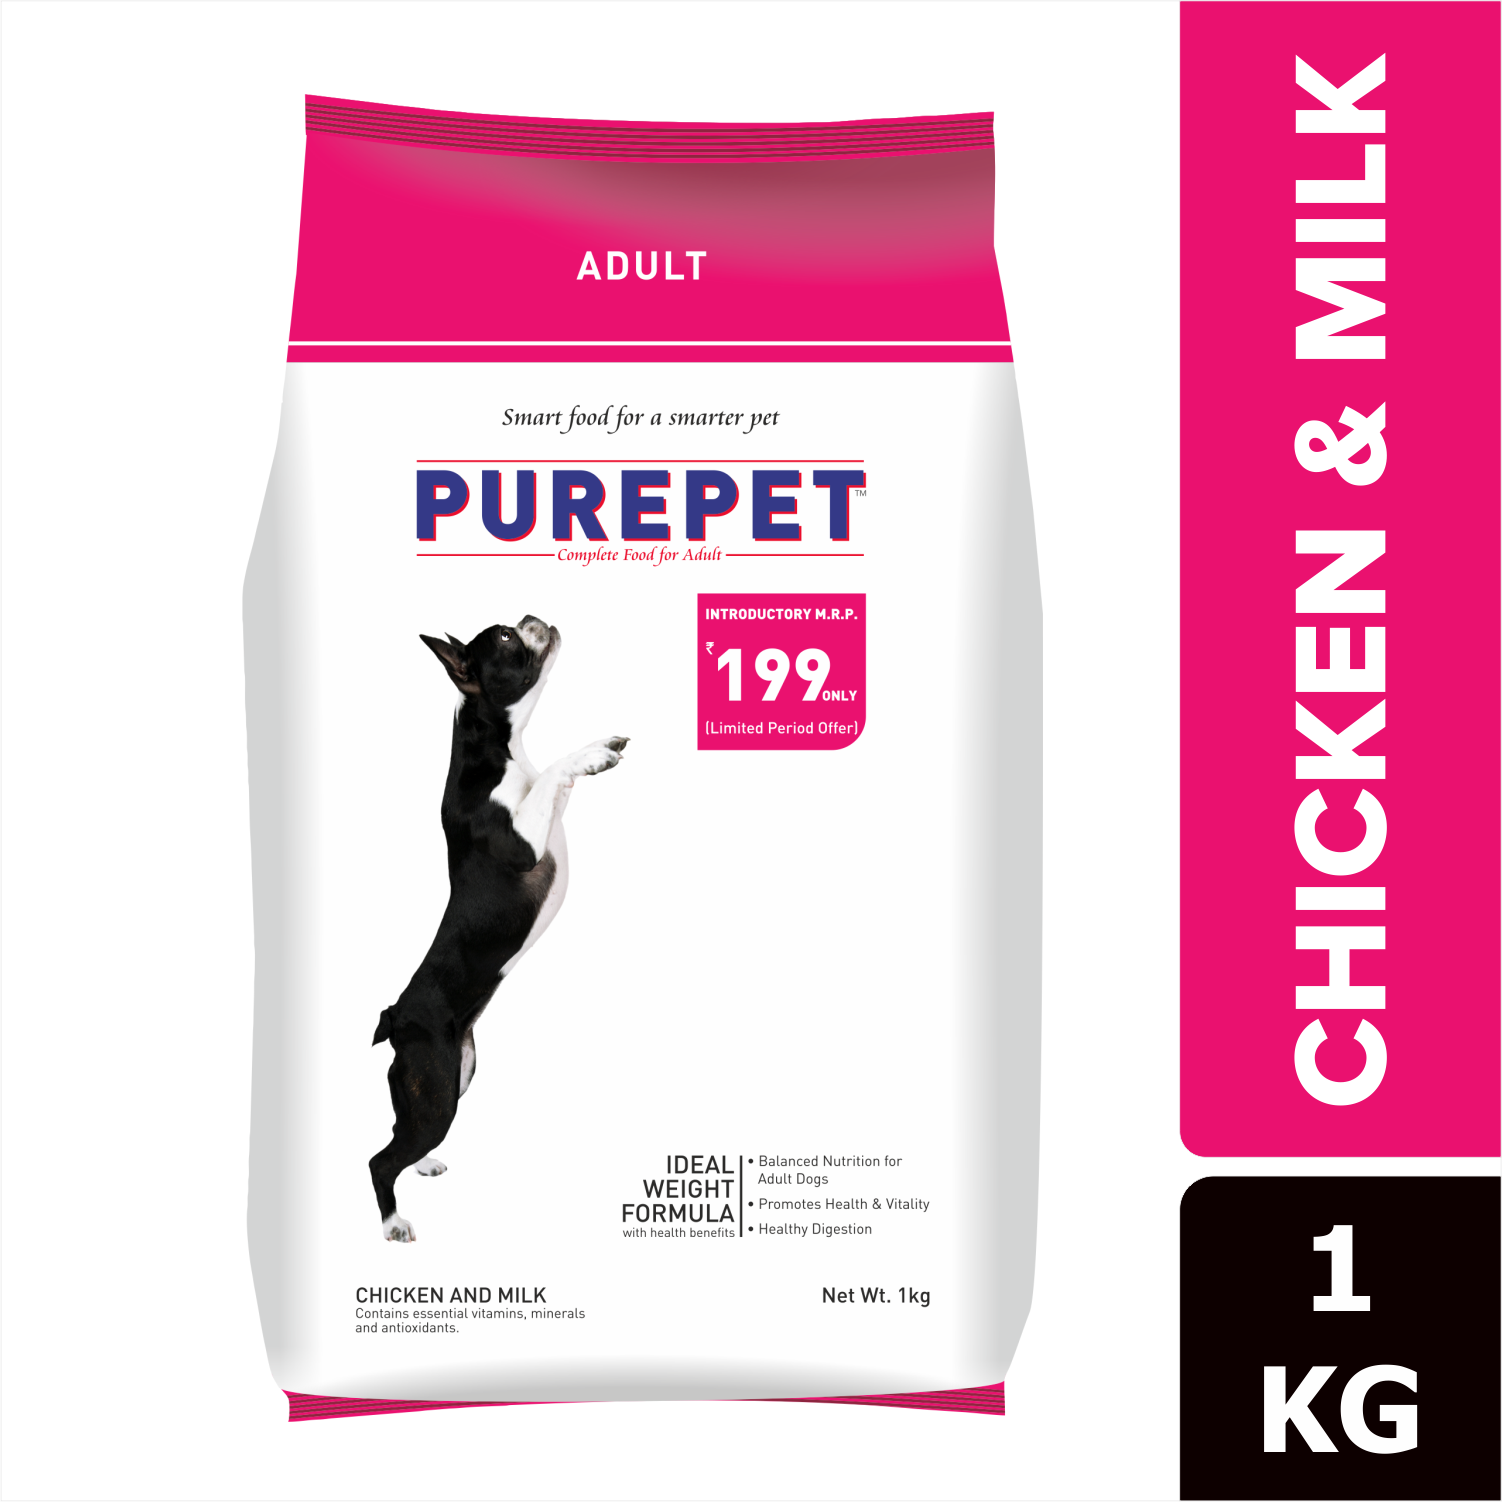 Purepet Chicken & Milk Adult Dry Dog Food